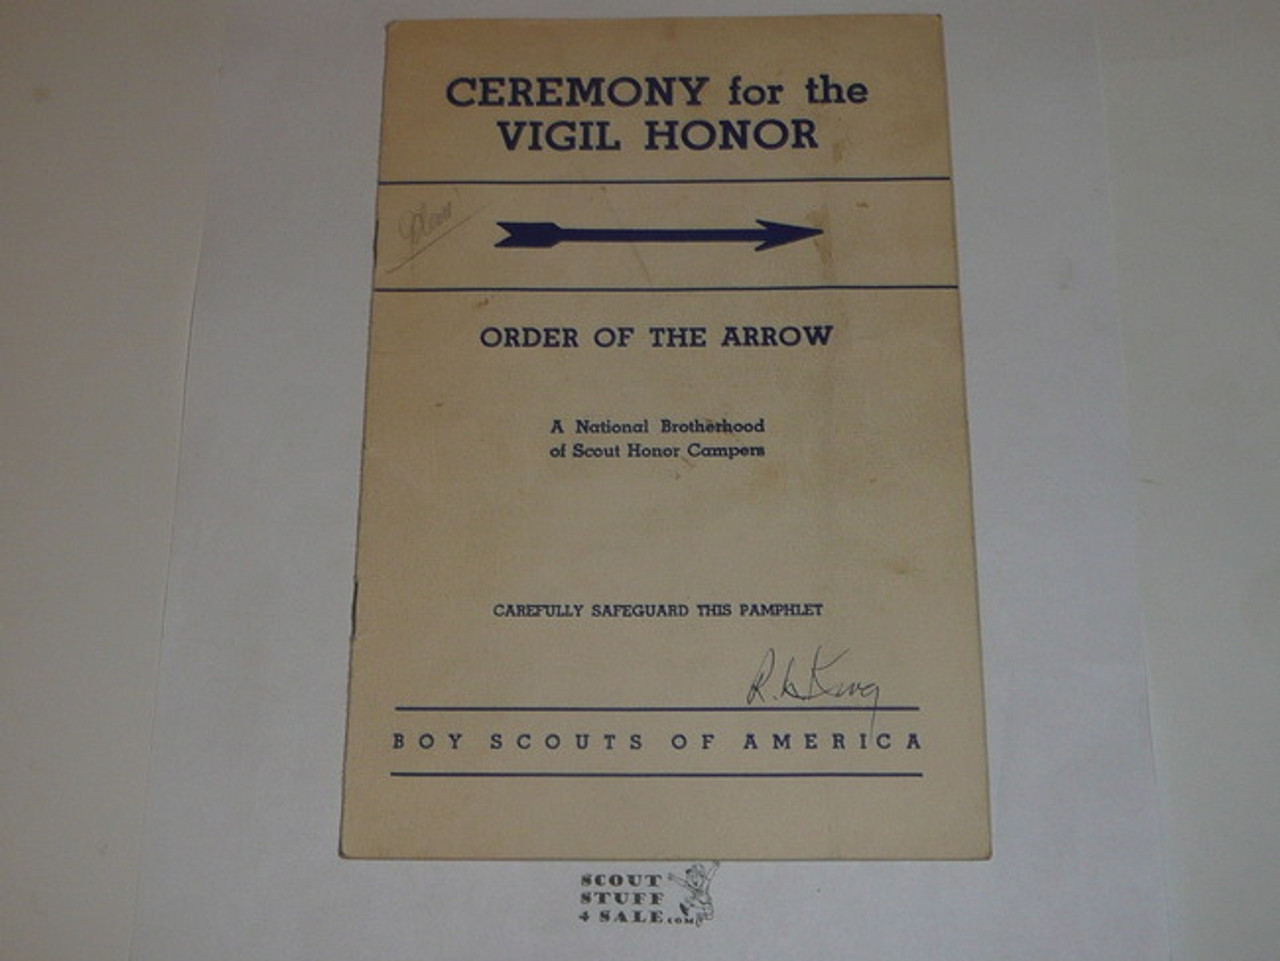 Vigil Ceremony Manual, Order of the Arrow, 1956, 5-56 Printing